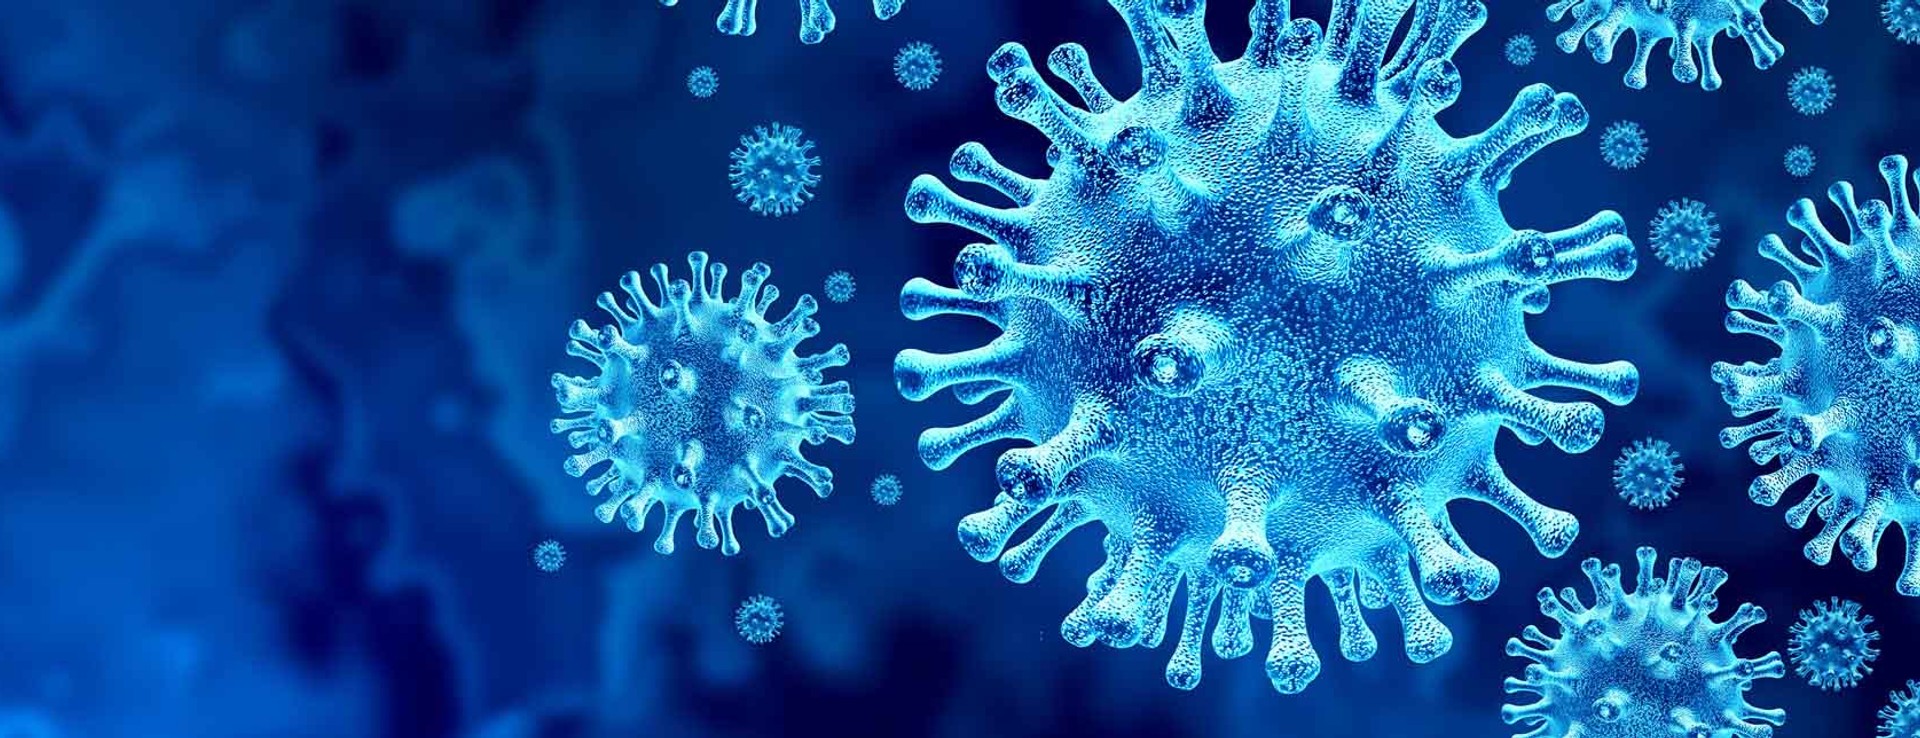 computer image of virus